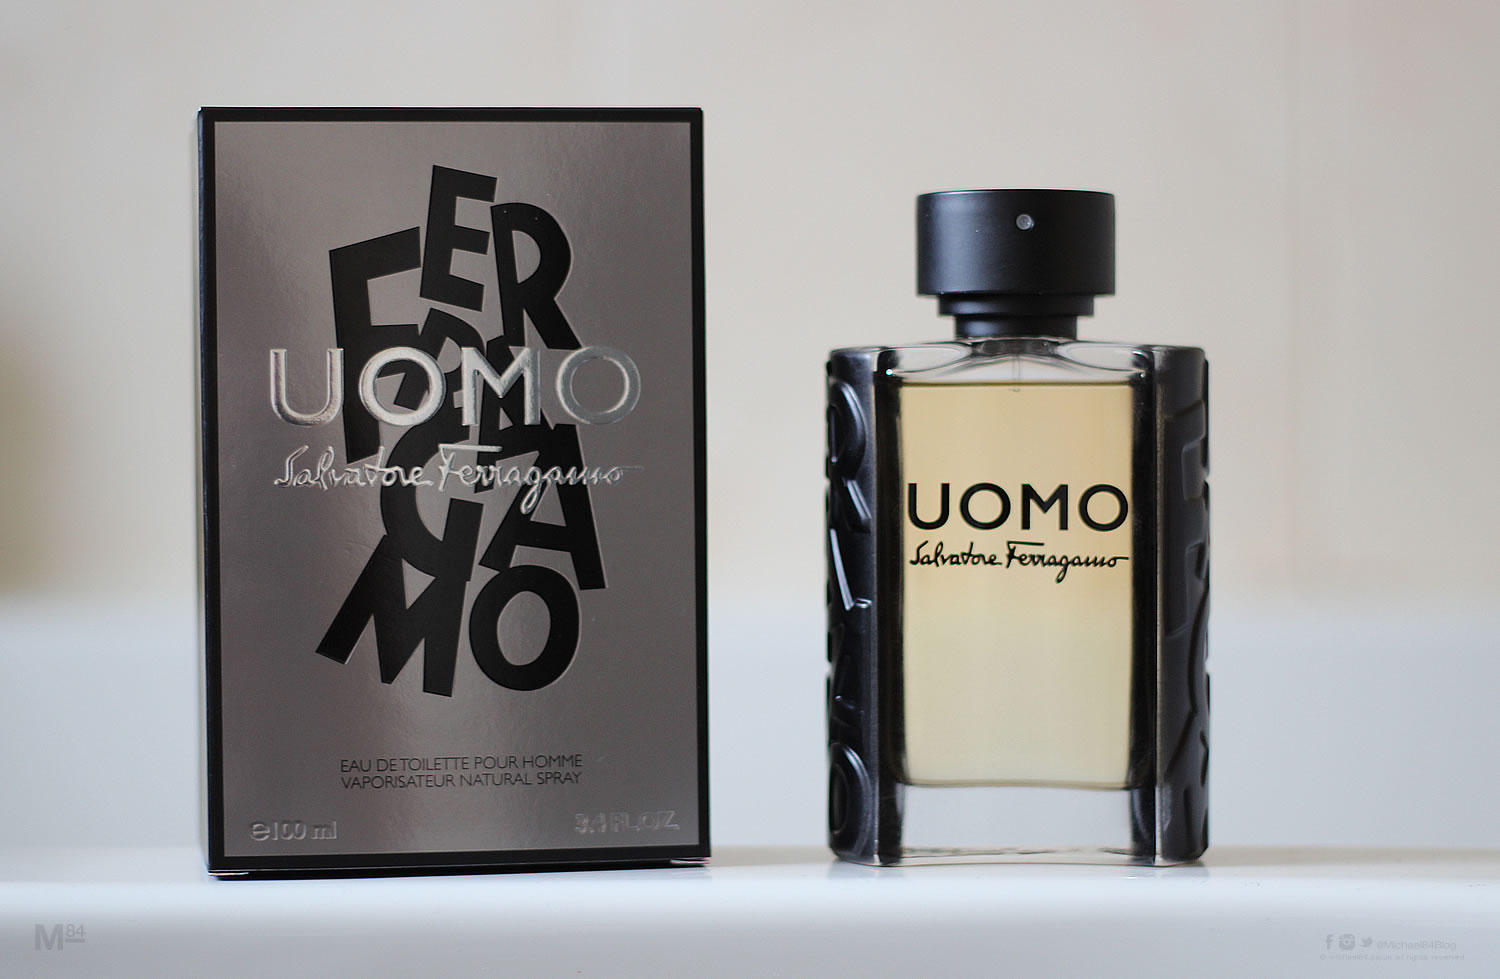 Uomo Salvatore Ferragamo Men's Fragrance Review & Unboxing